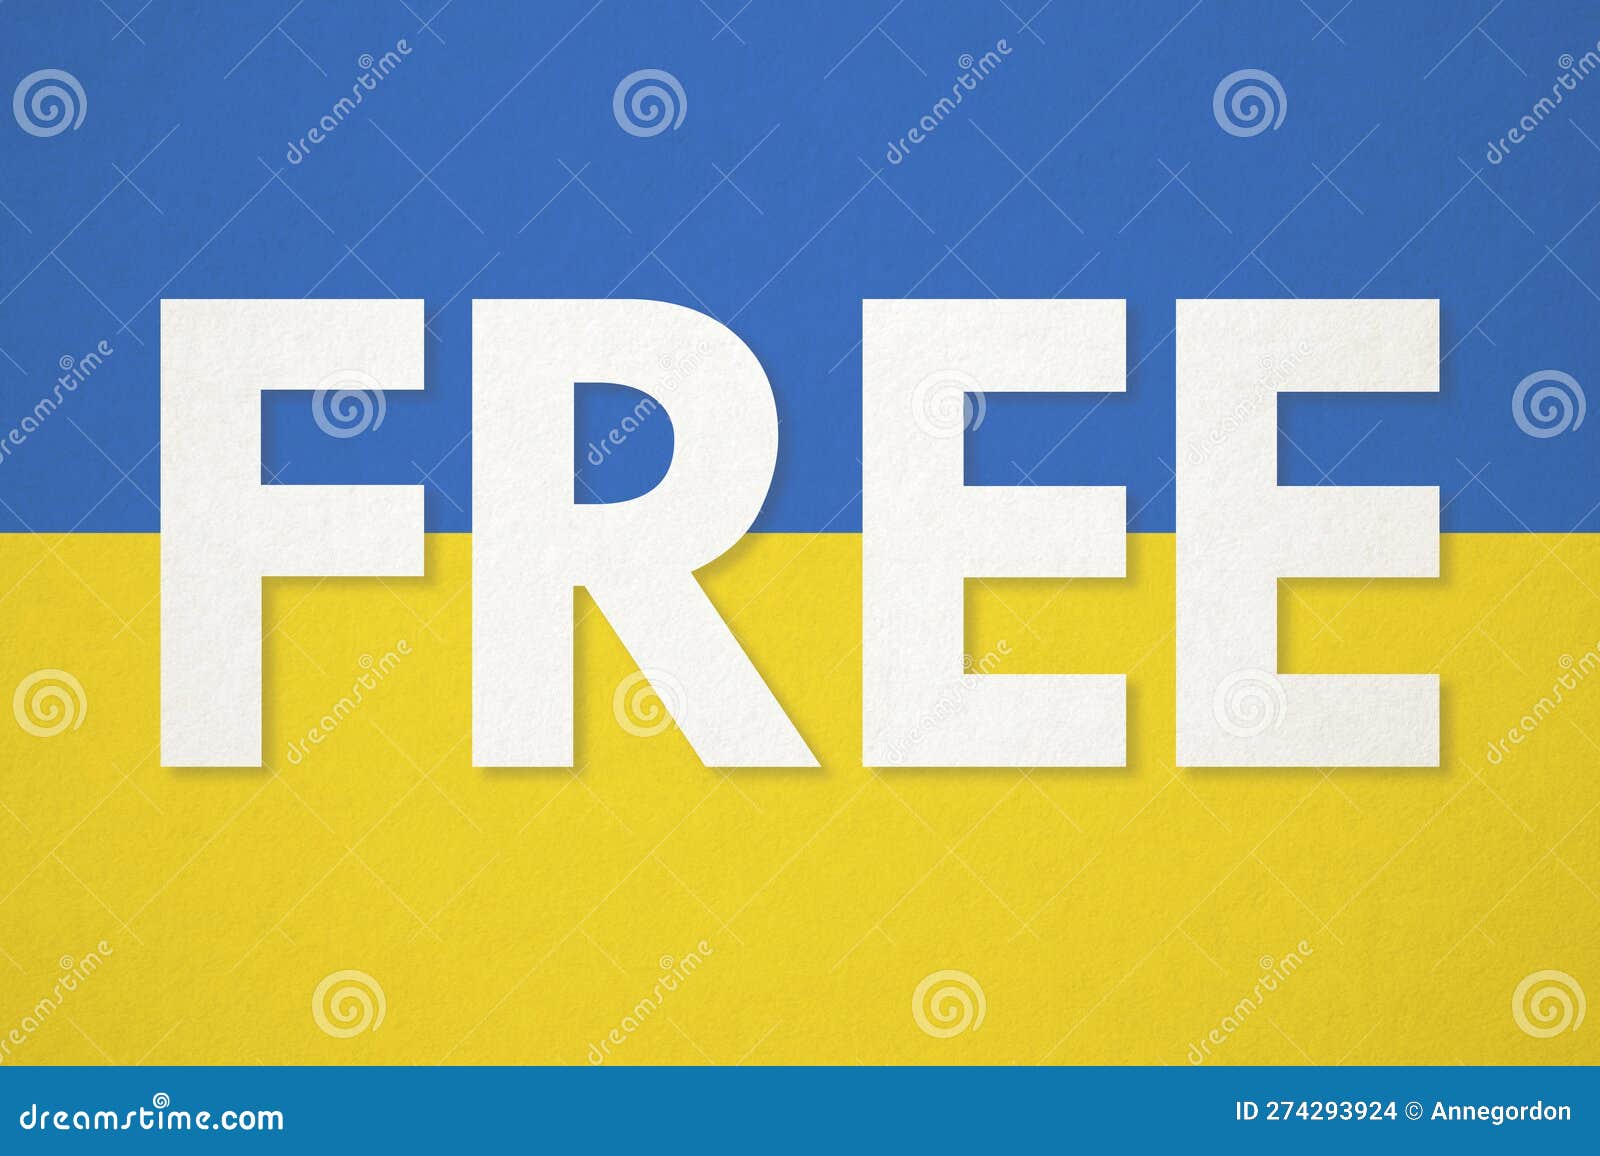 free text on the flag of ukraine